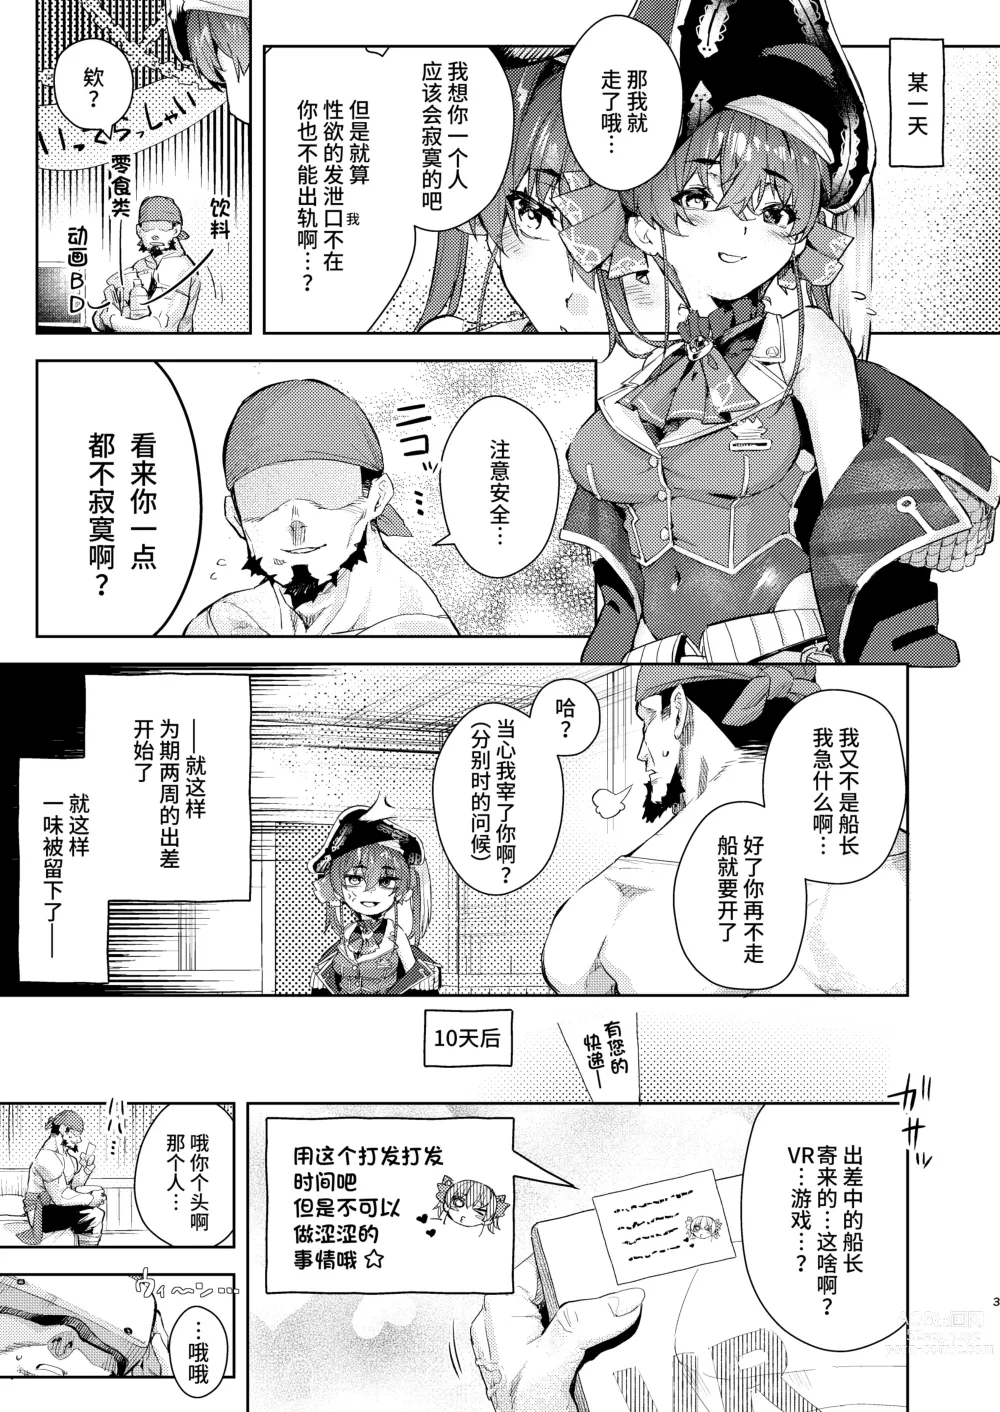 Page 3 of doujinshi VR na Senchou